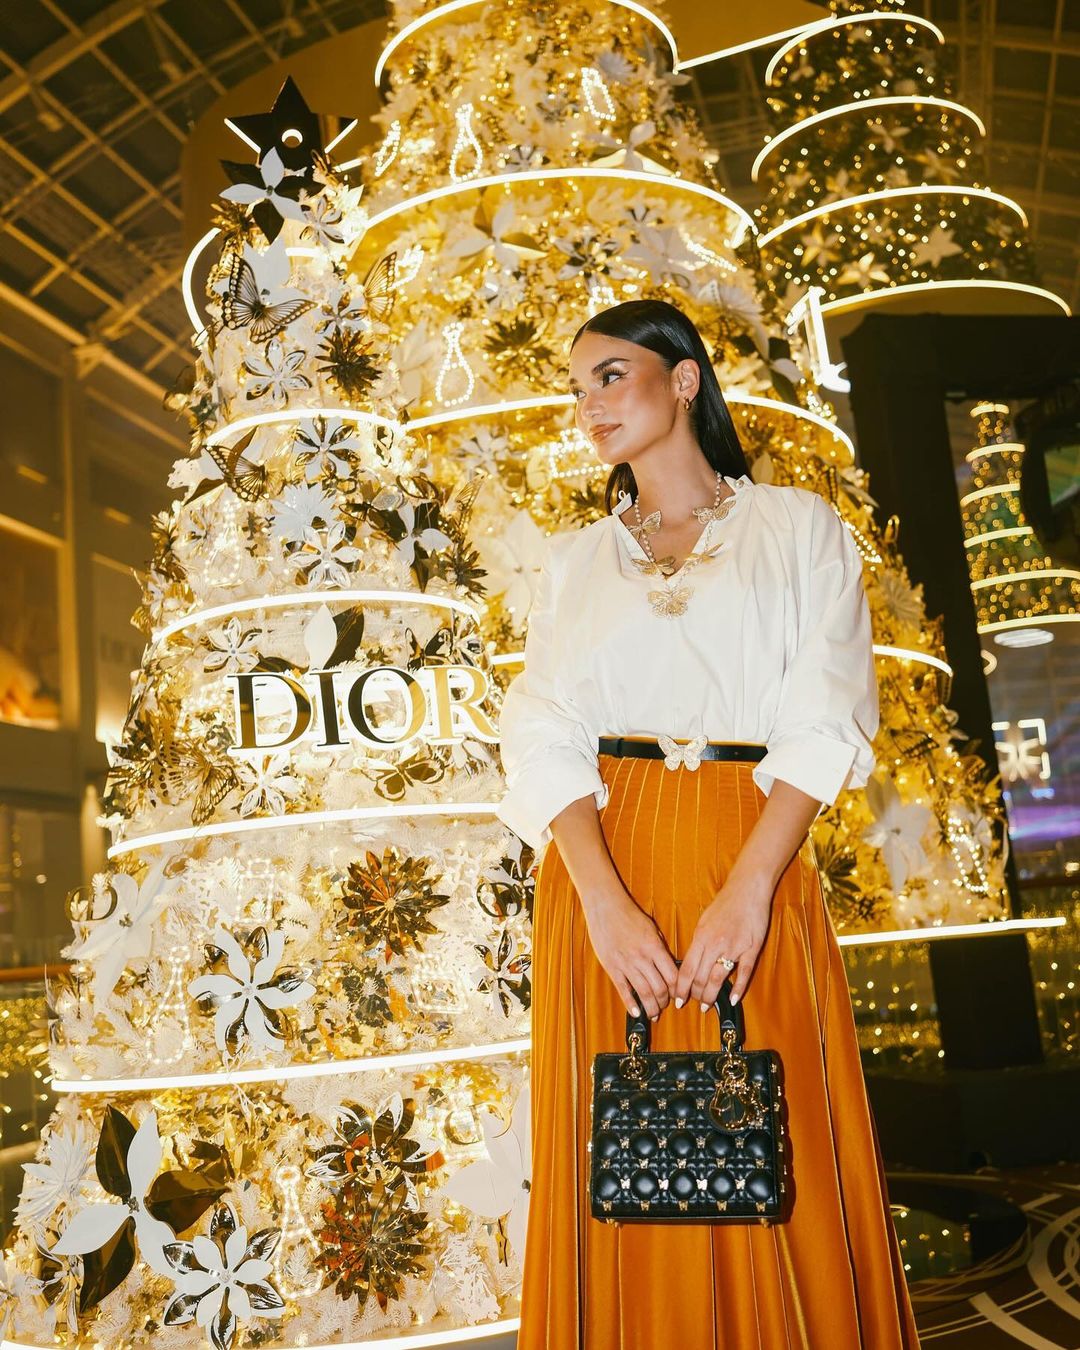 Pia Wurtzbach Dior event in Singapore